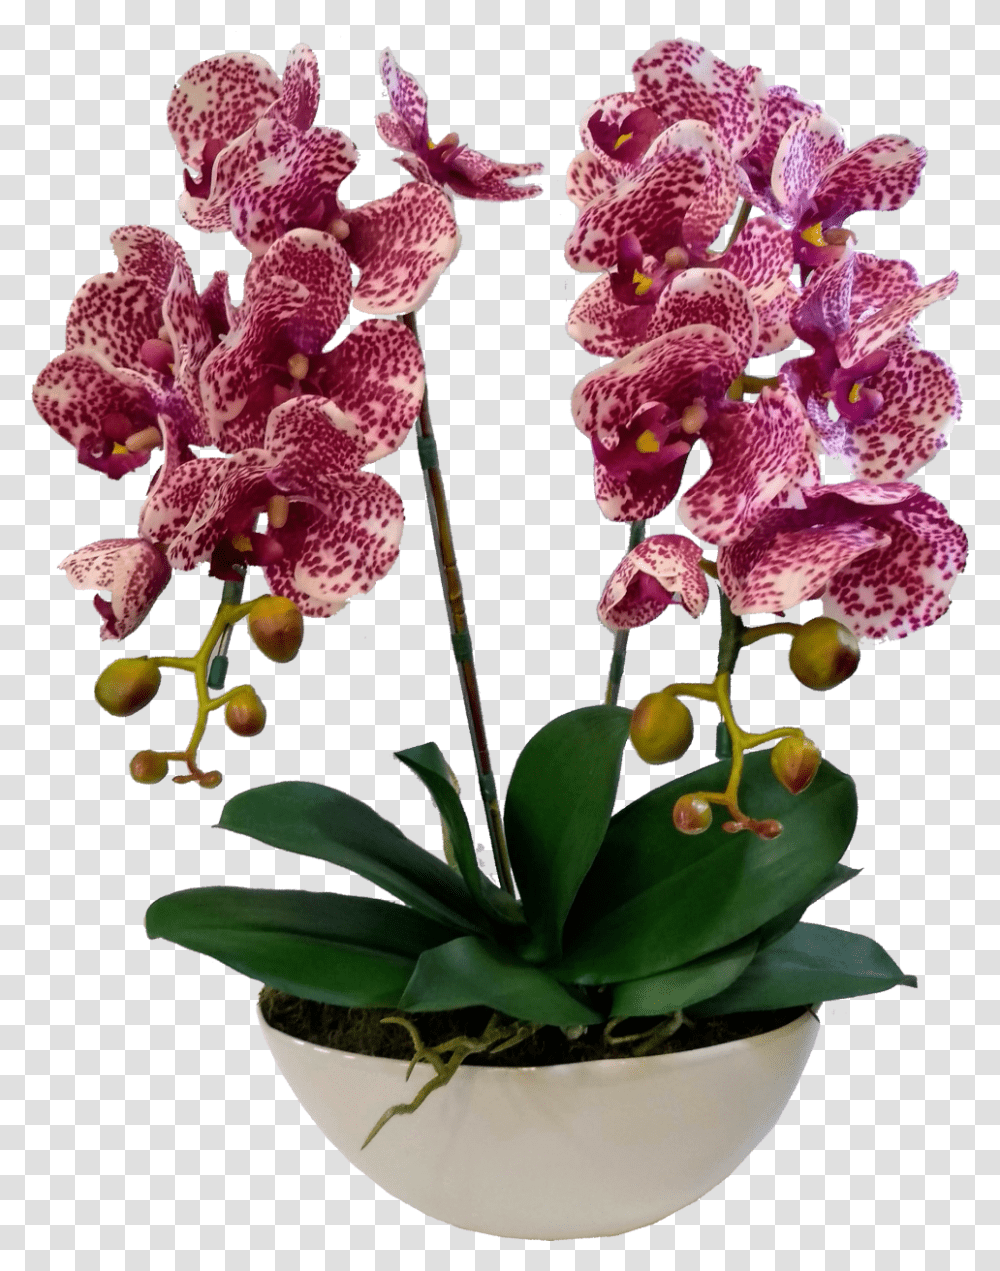 Orchids Of The Philippines, Plant, Flower, Blossom, Flower Arrangement Transparent Png